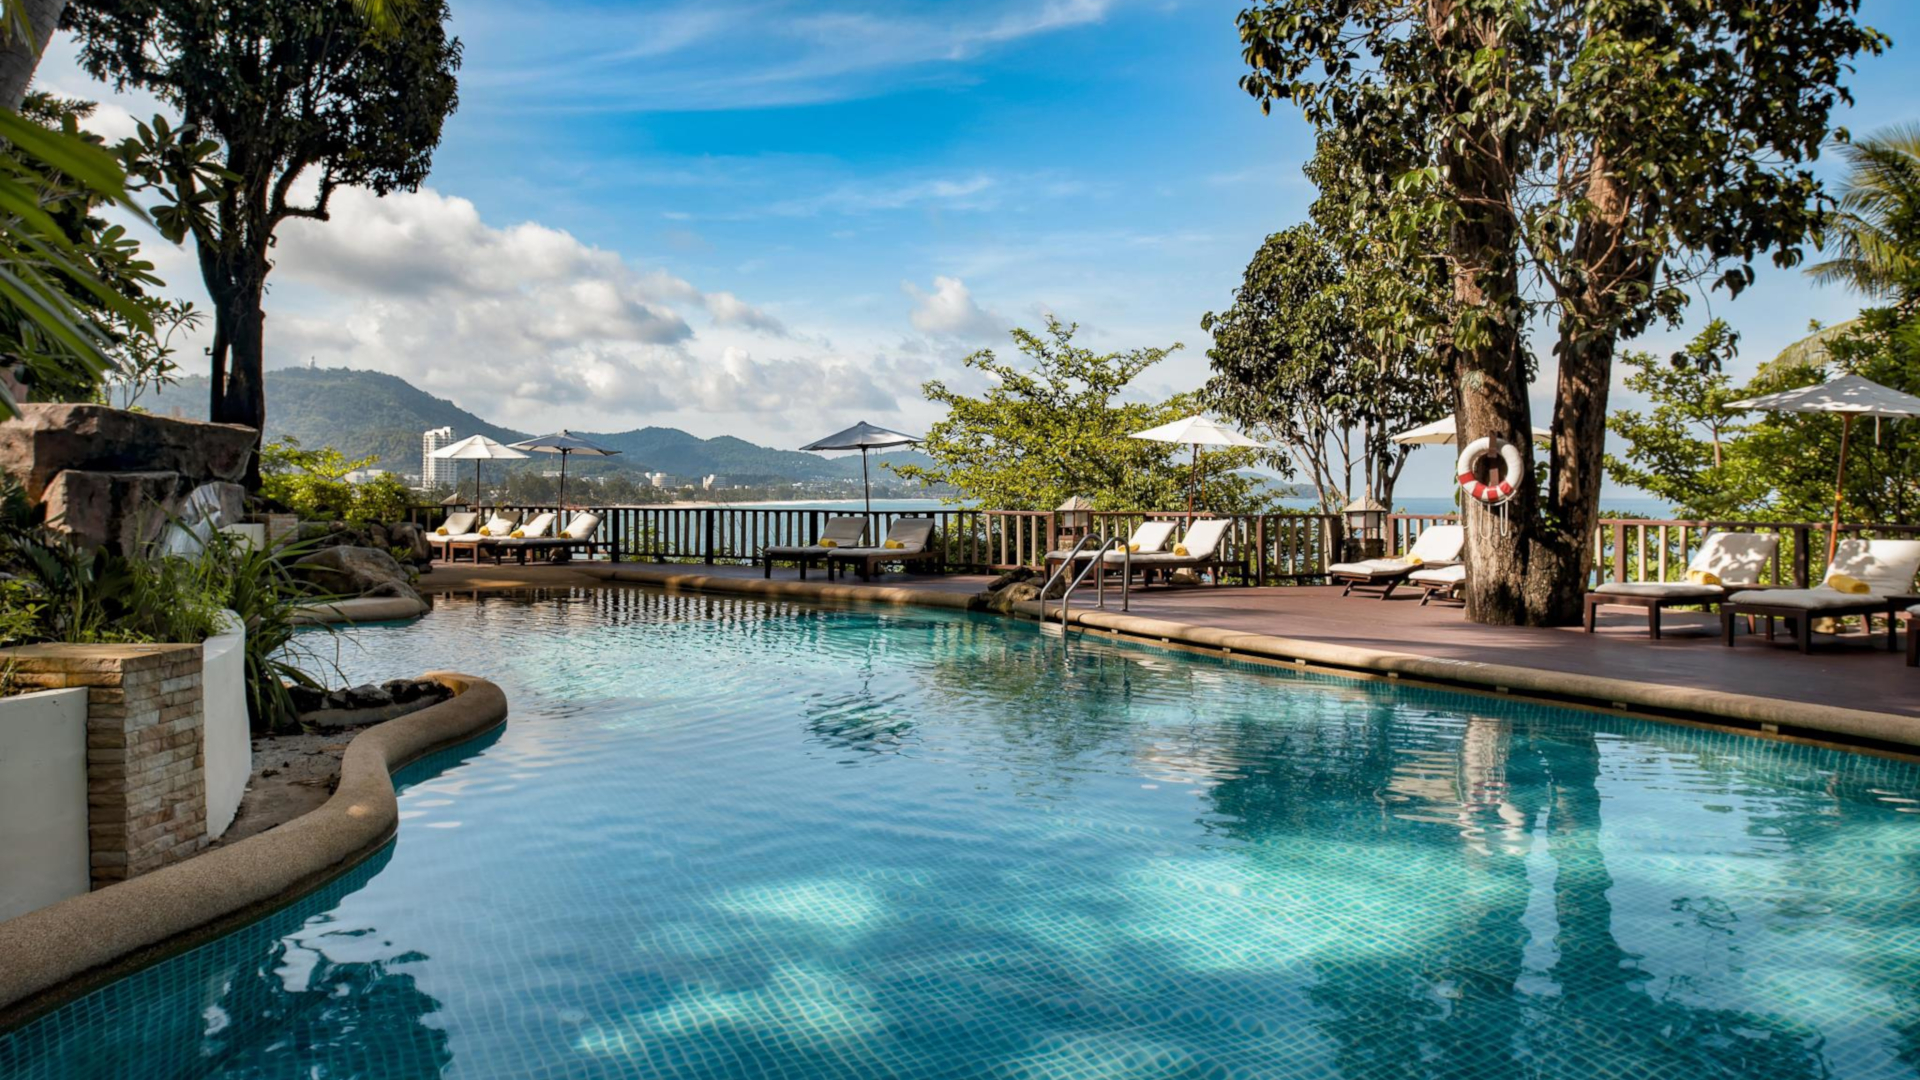 Centara Villas Phuket Thailand Pool View